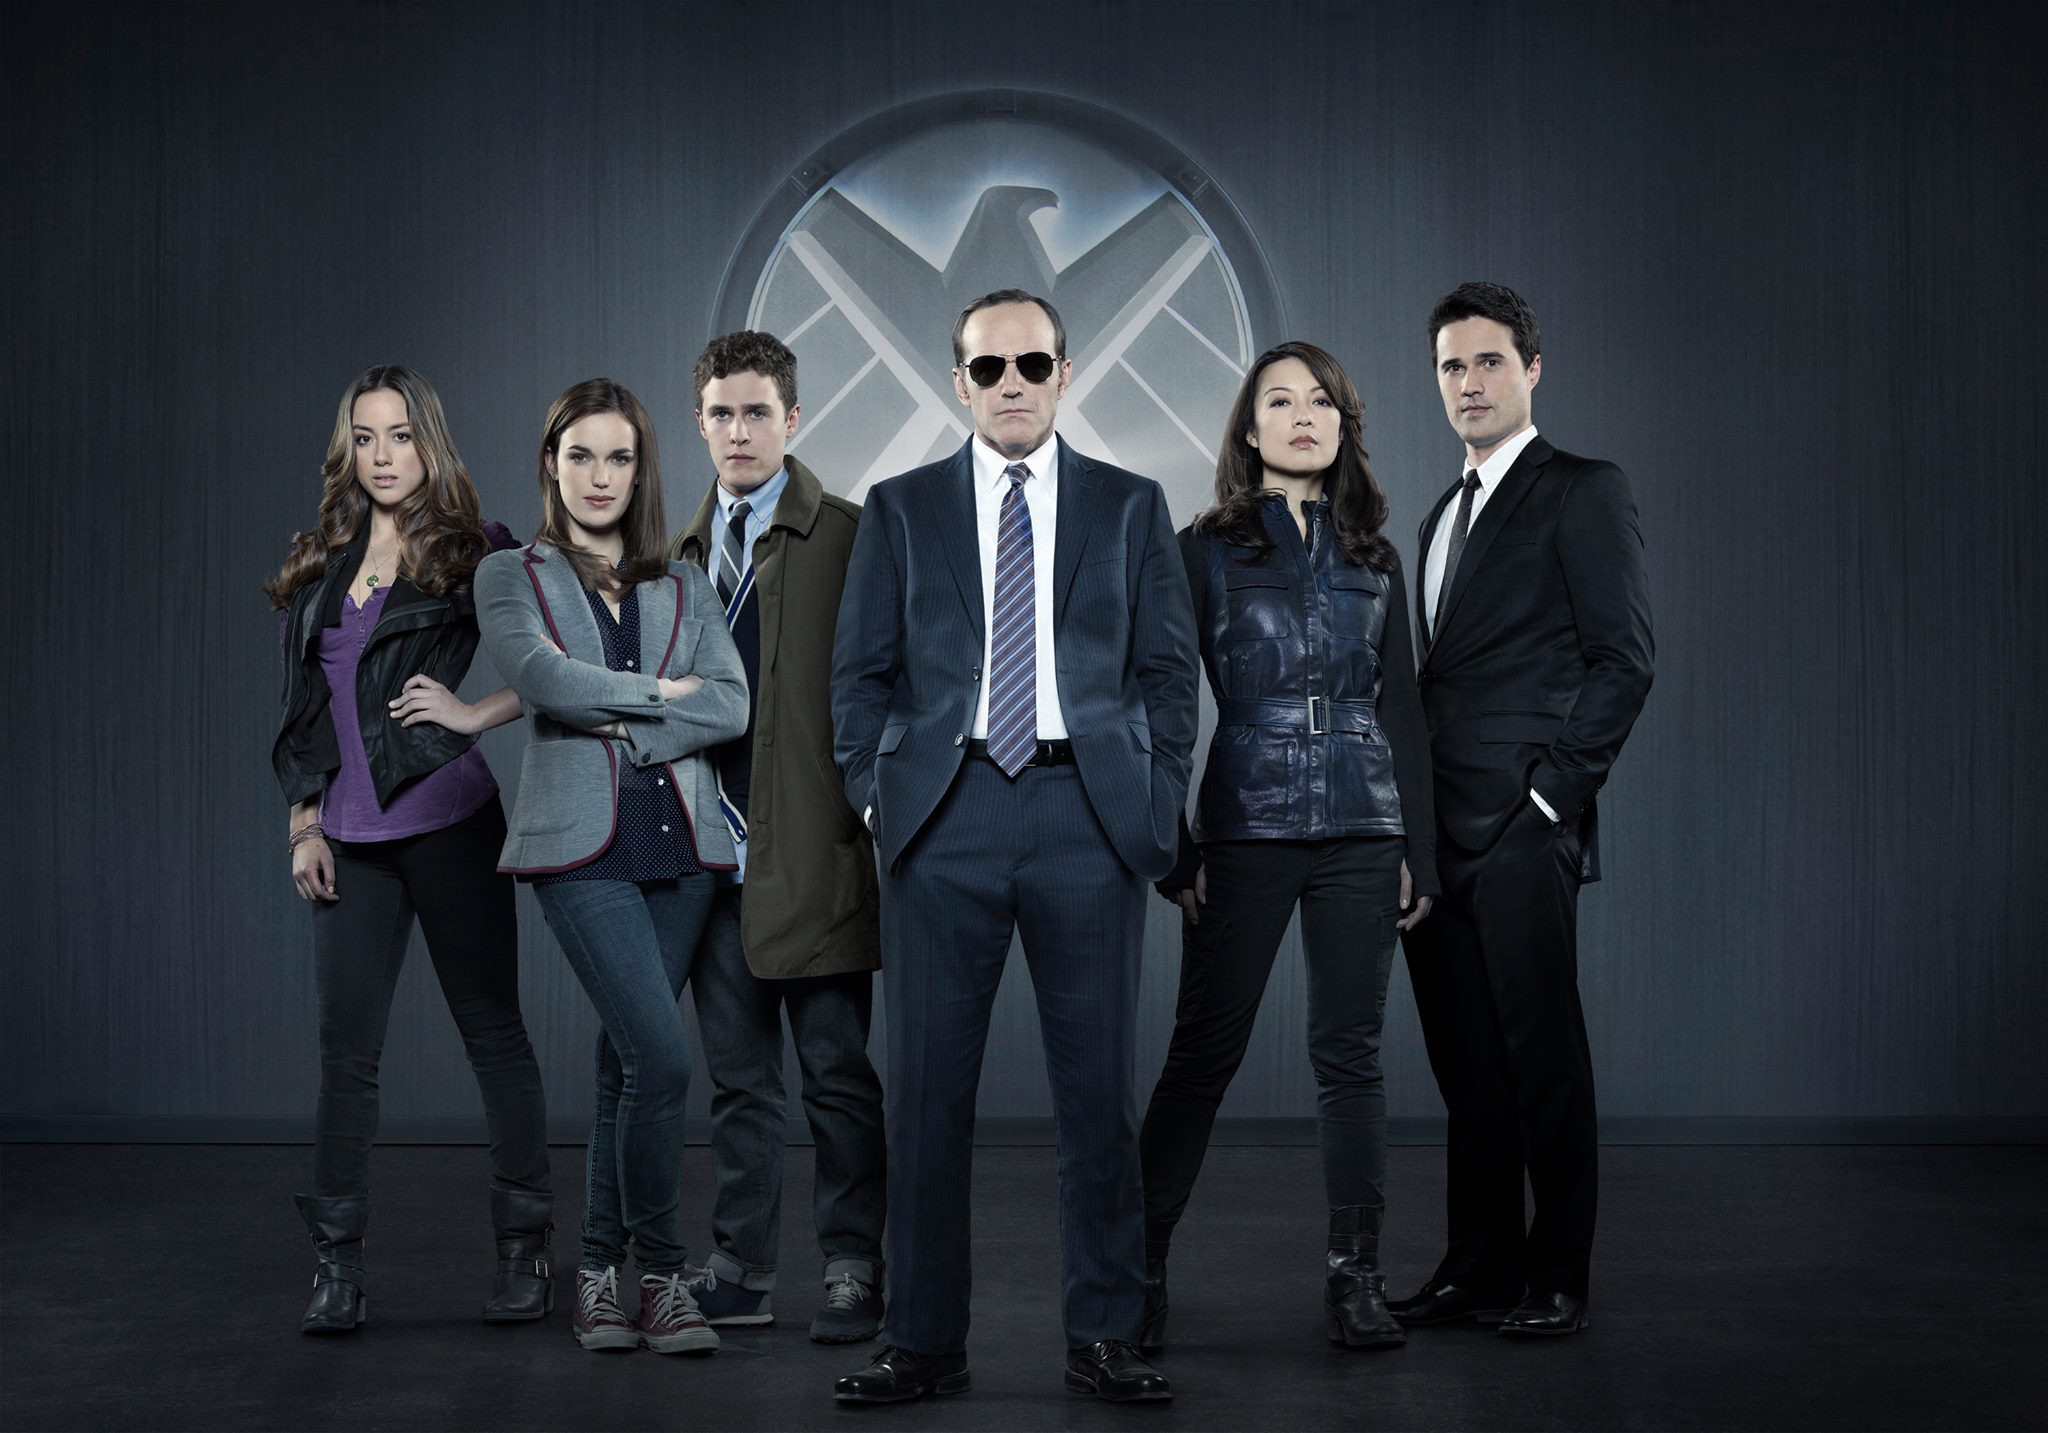 Geek insider, geekinsider, geekinsider. Com,, agents of s. H. I. E. L. D. Season 2 date announced, entertainment